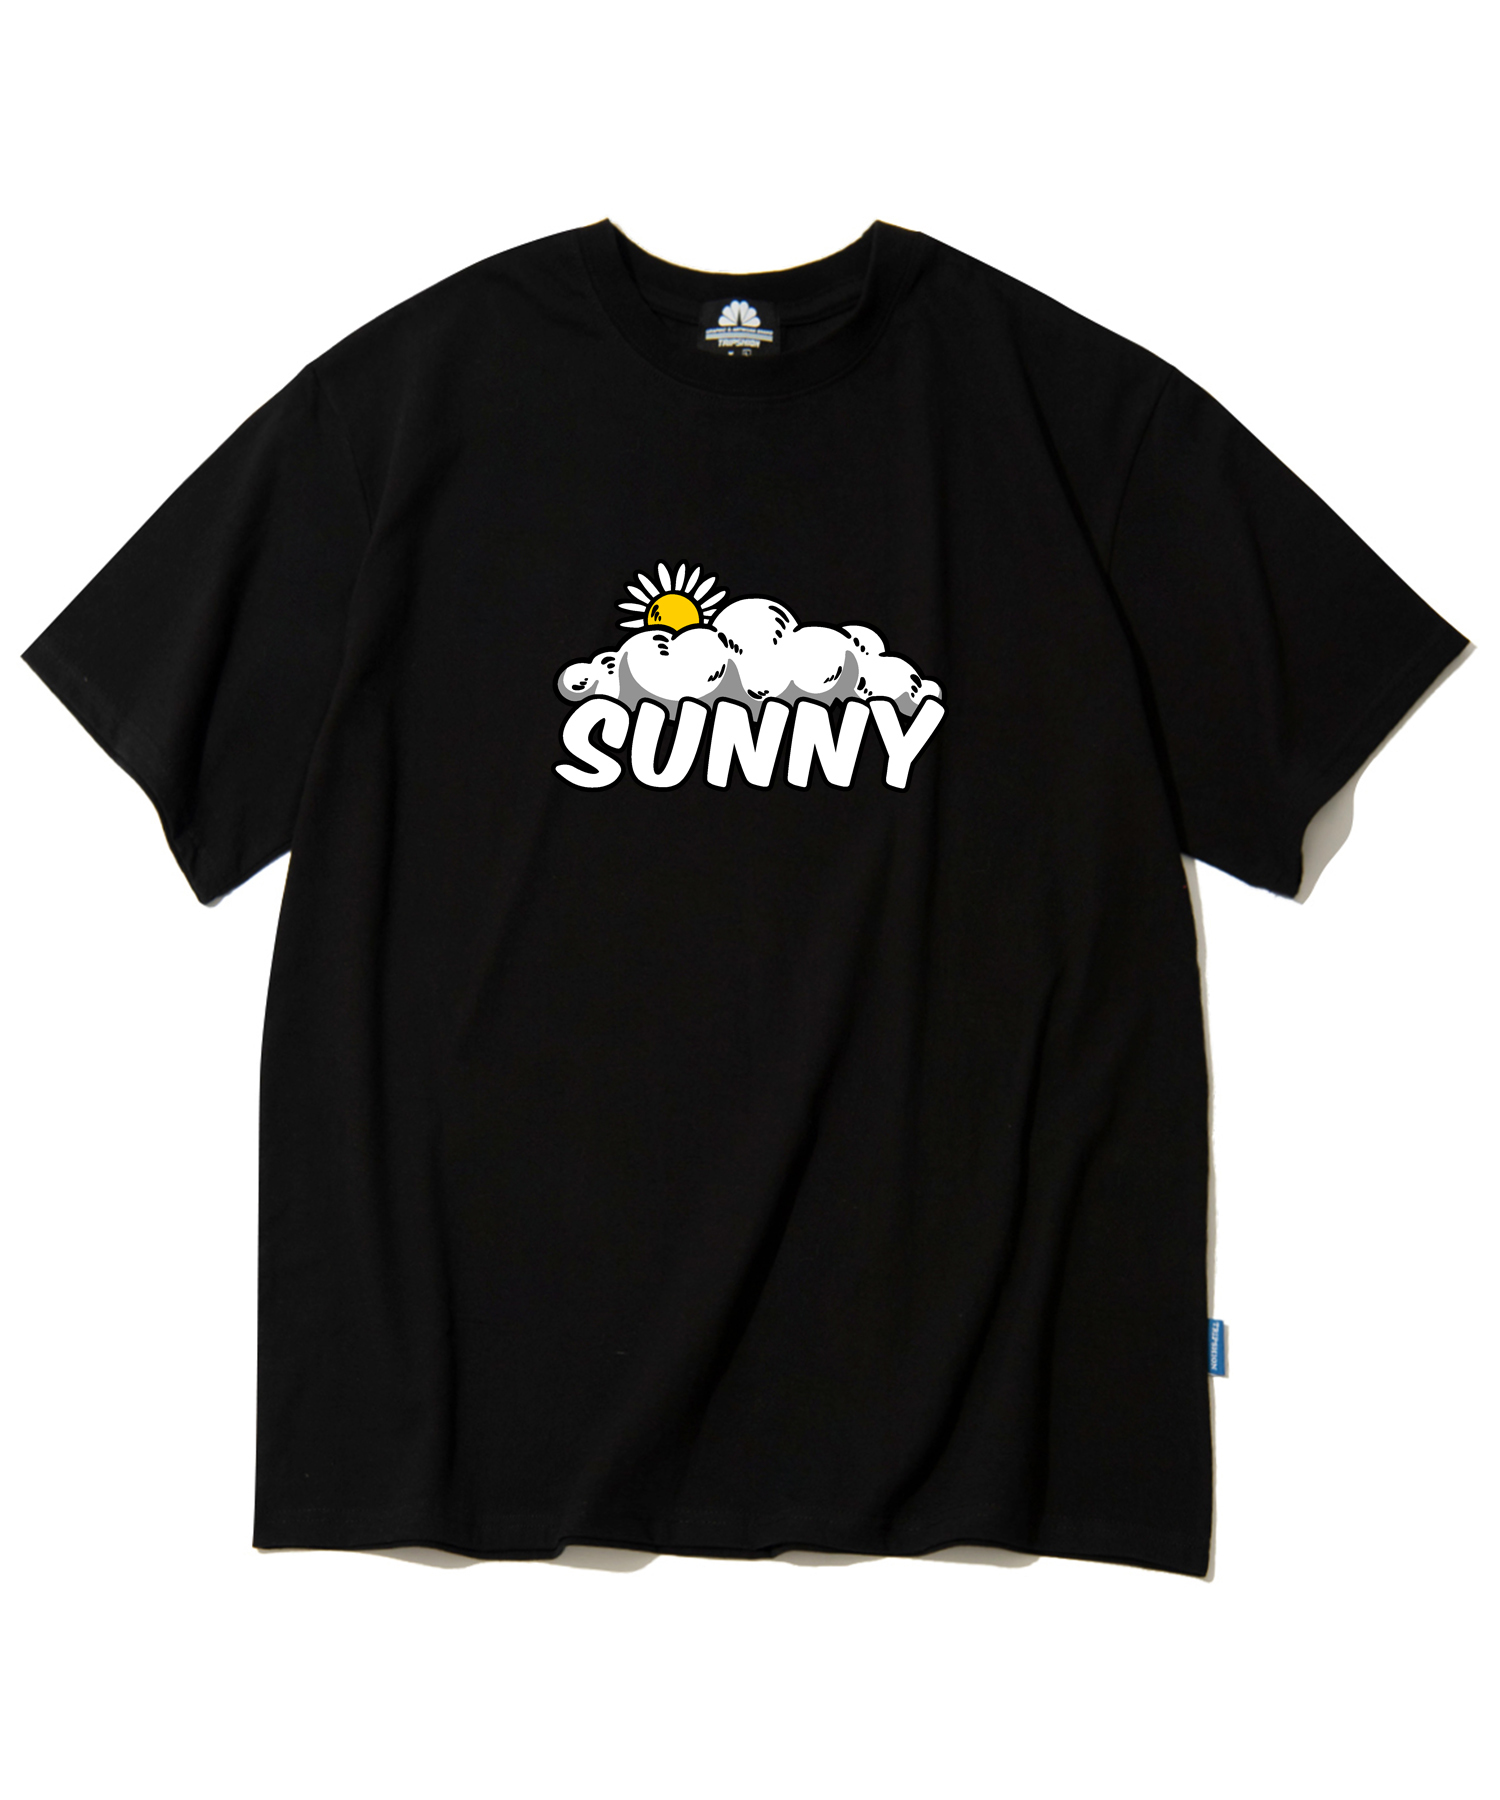 SUNNY &amp; CLOUD GRAPHIC T-SHIRTS - BLACK